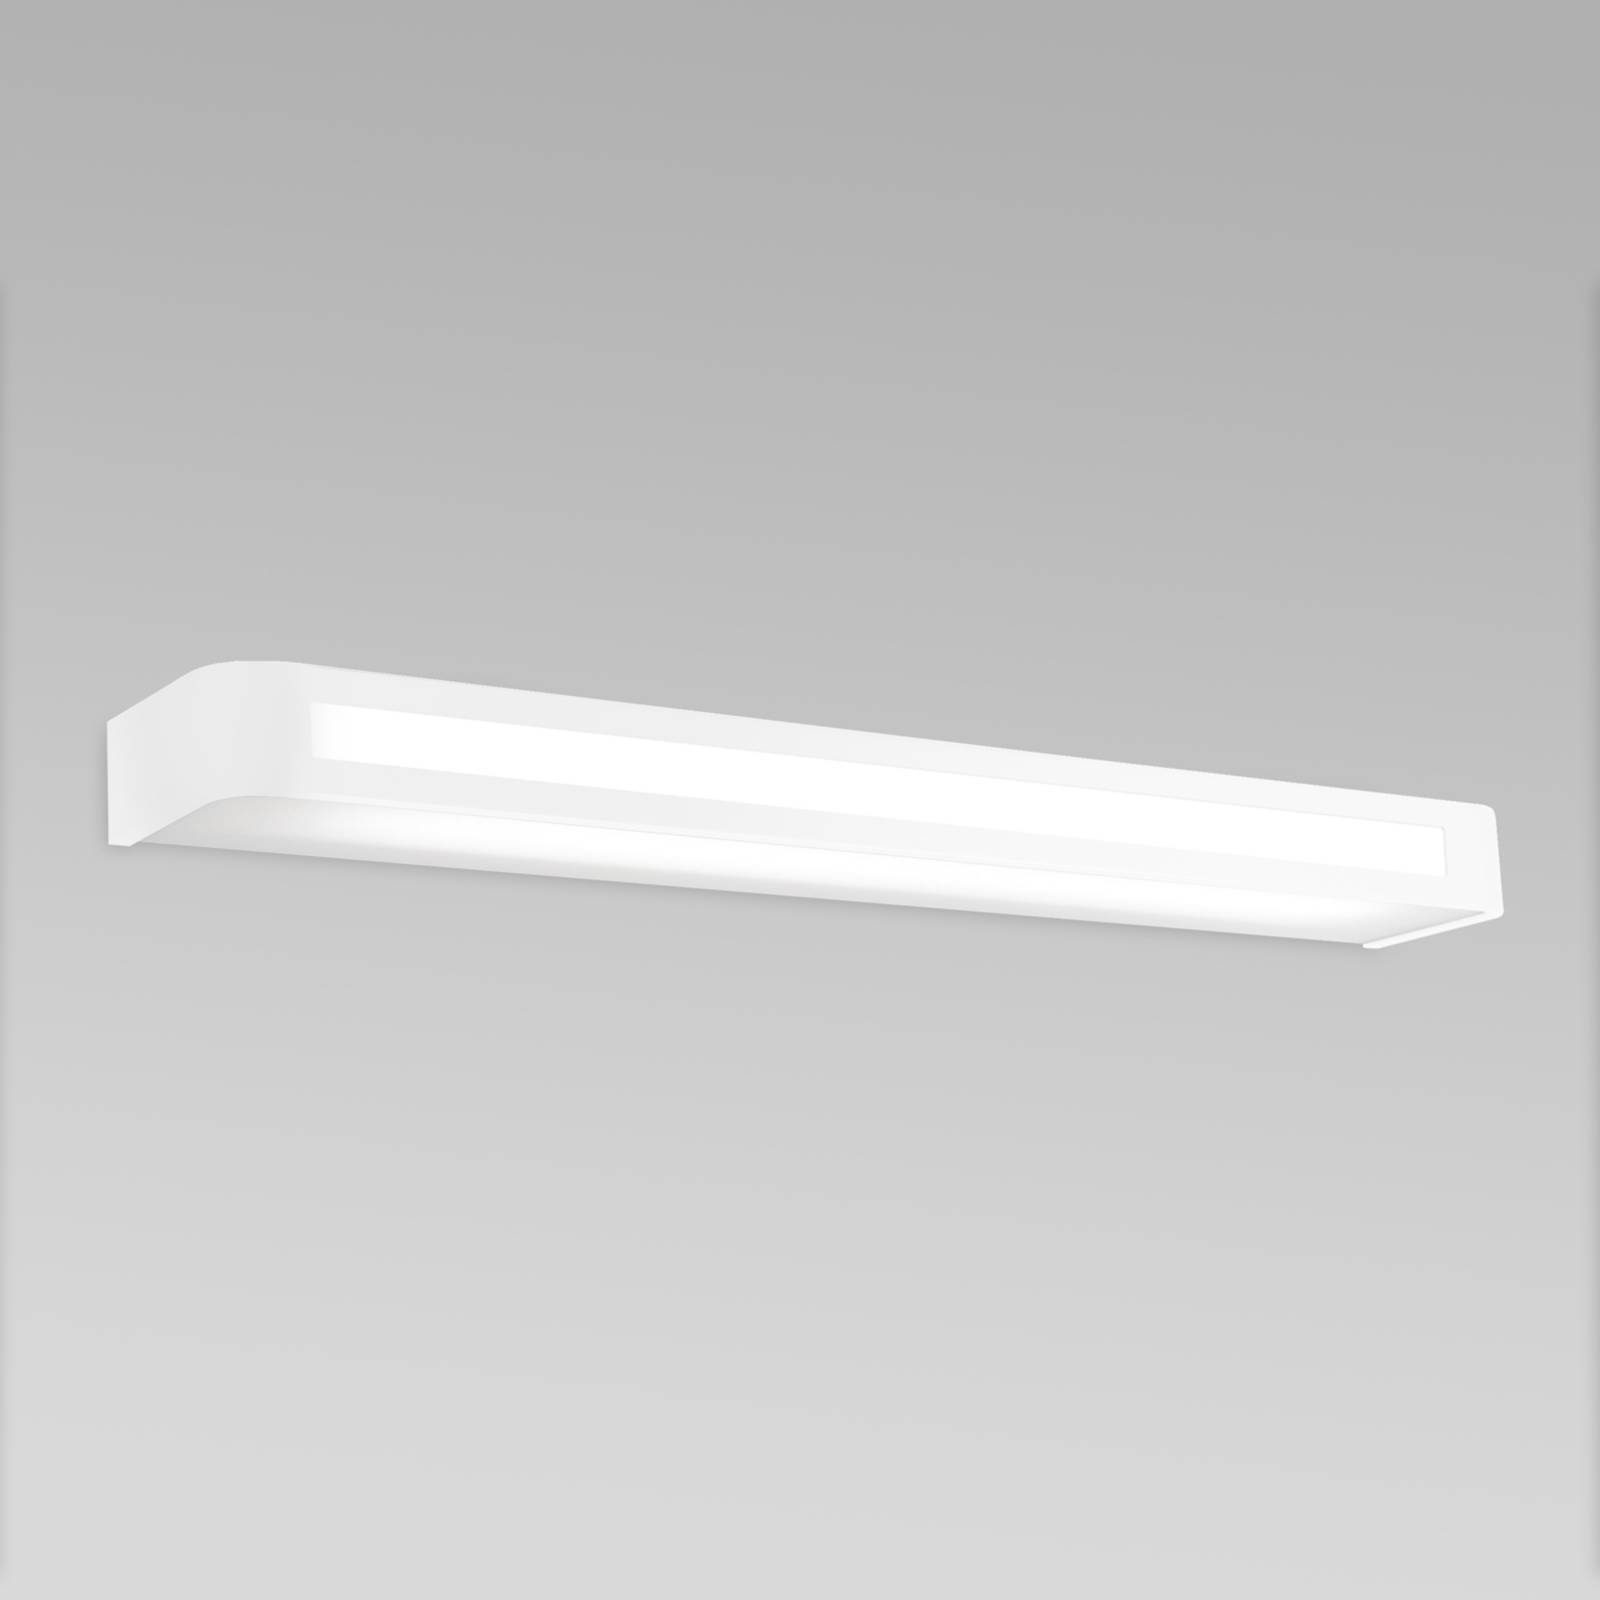 Pujol iluminación időtlen led fali lámpa arcos, ip20, 60 cm, fehér